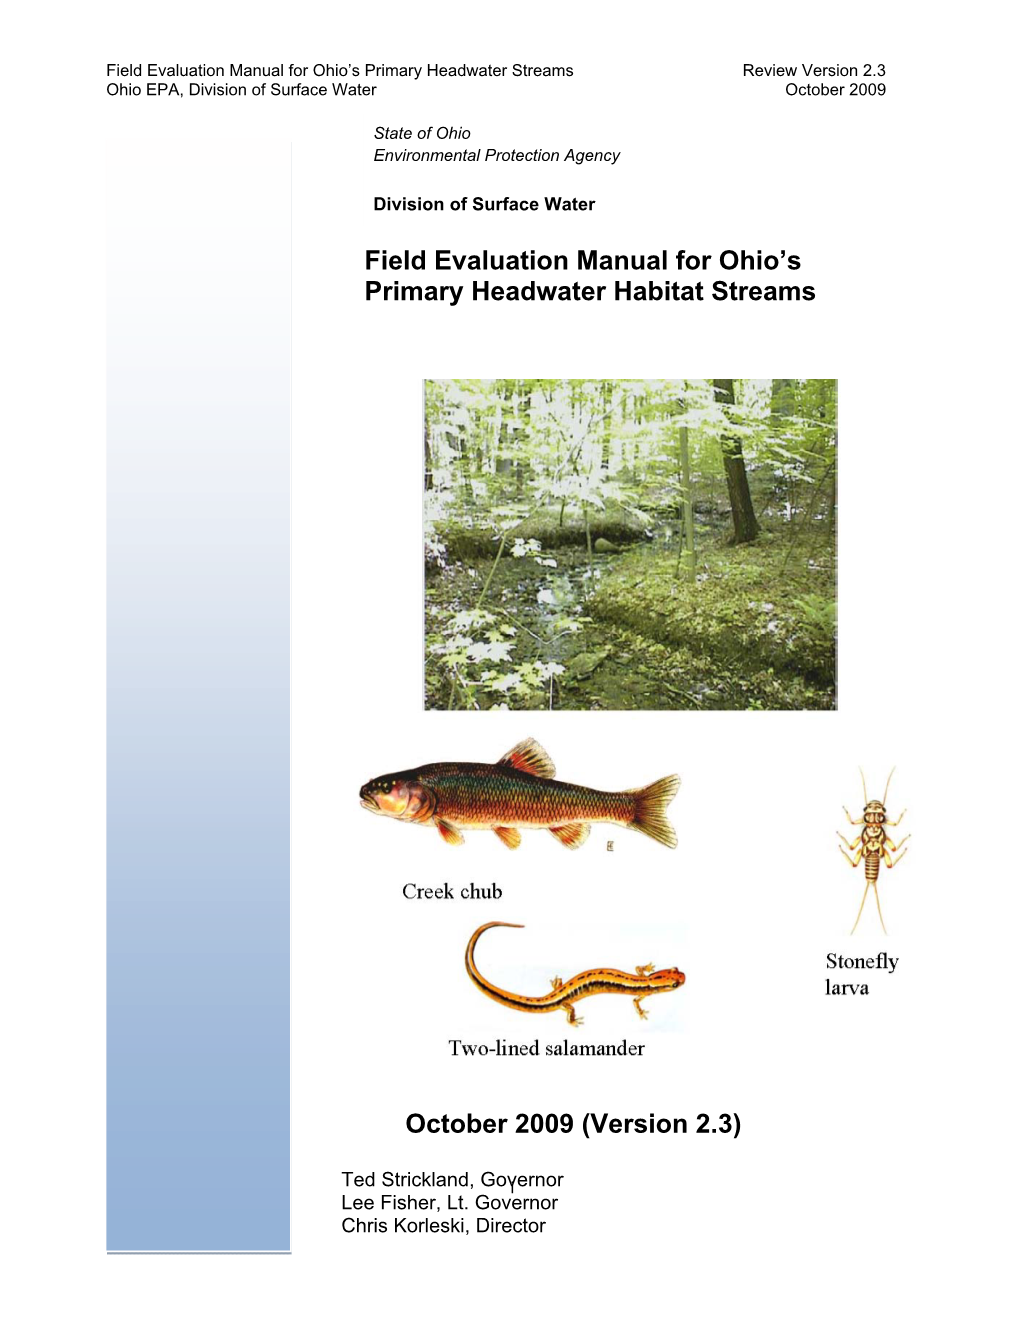 Field Evaluation Manual for Ohio's Primary Headwater Habitat Streams October 2009 (Version 2.3)